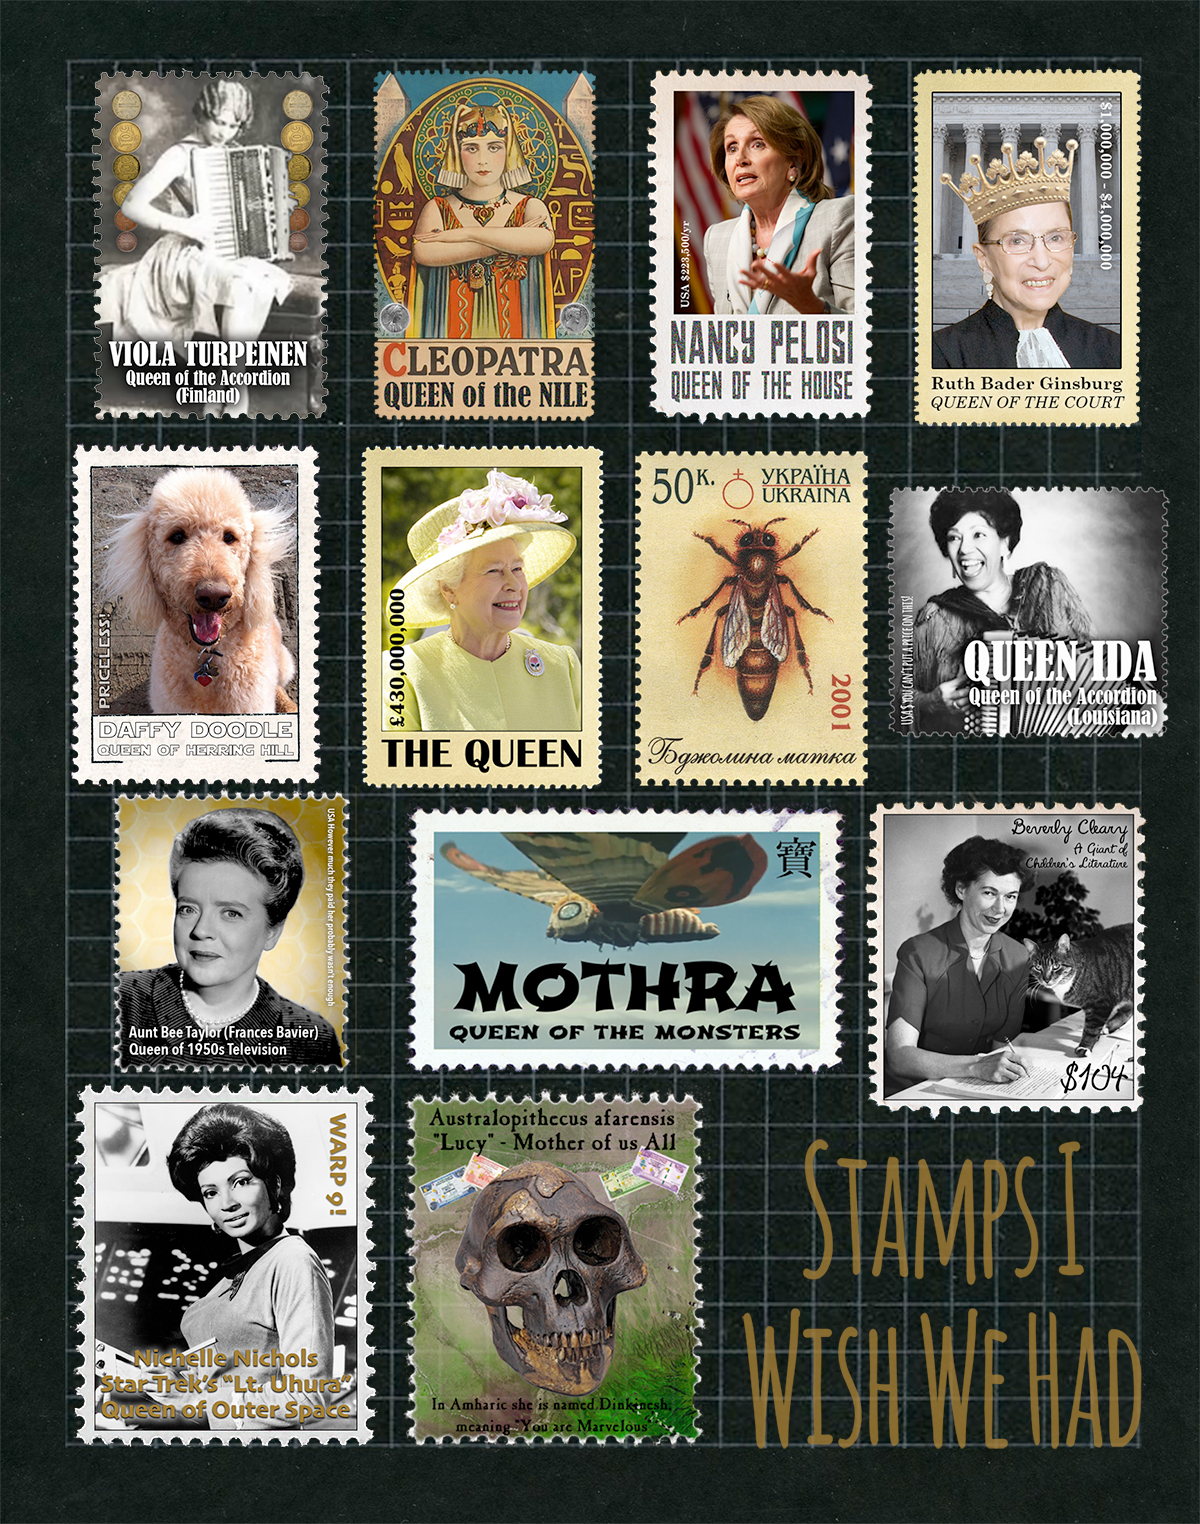 Stamps I Wish We Had